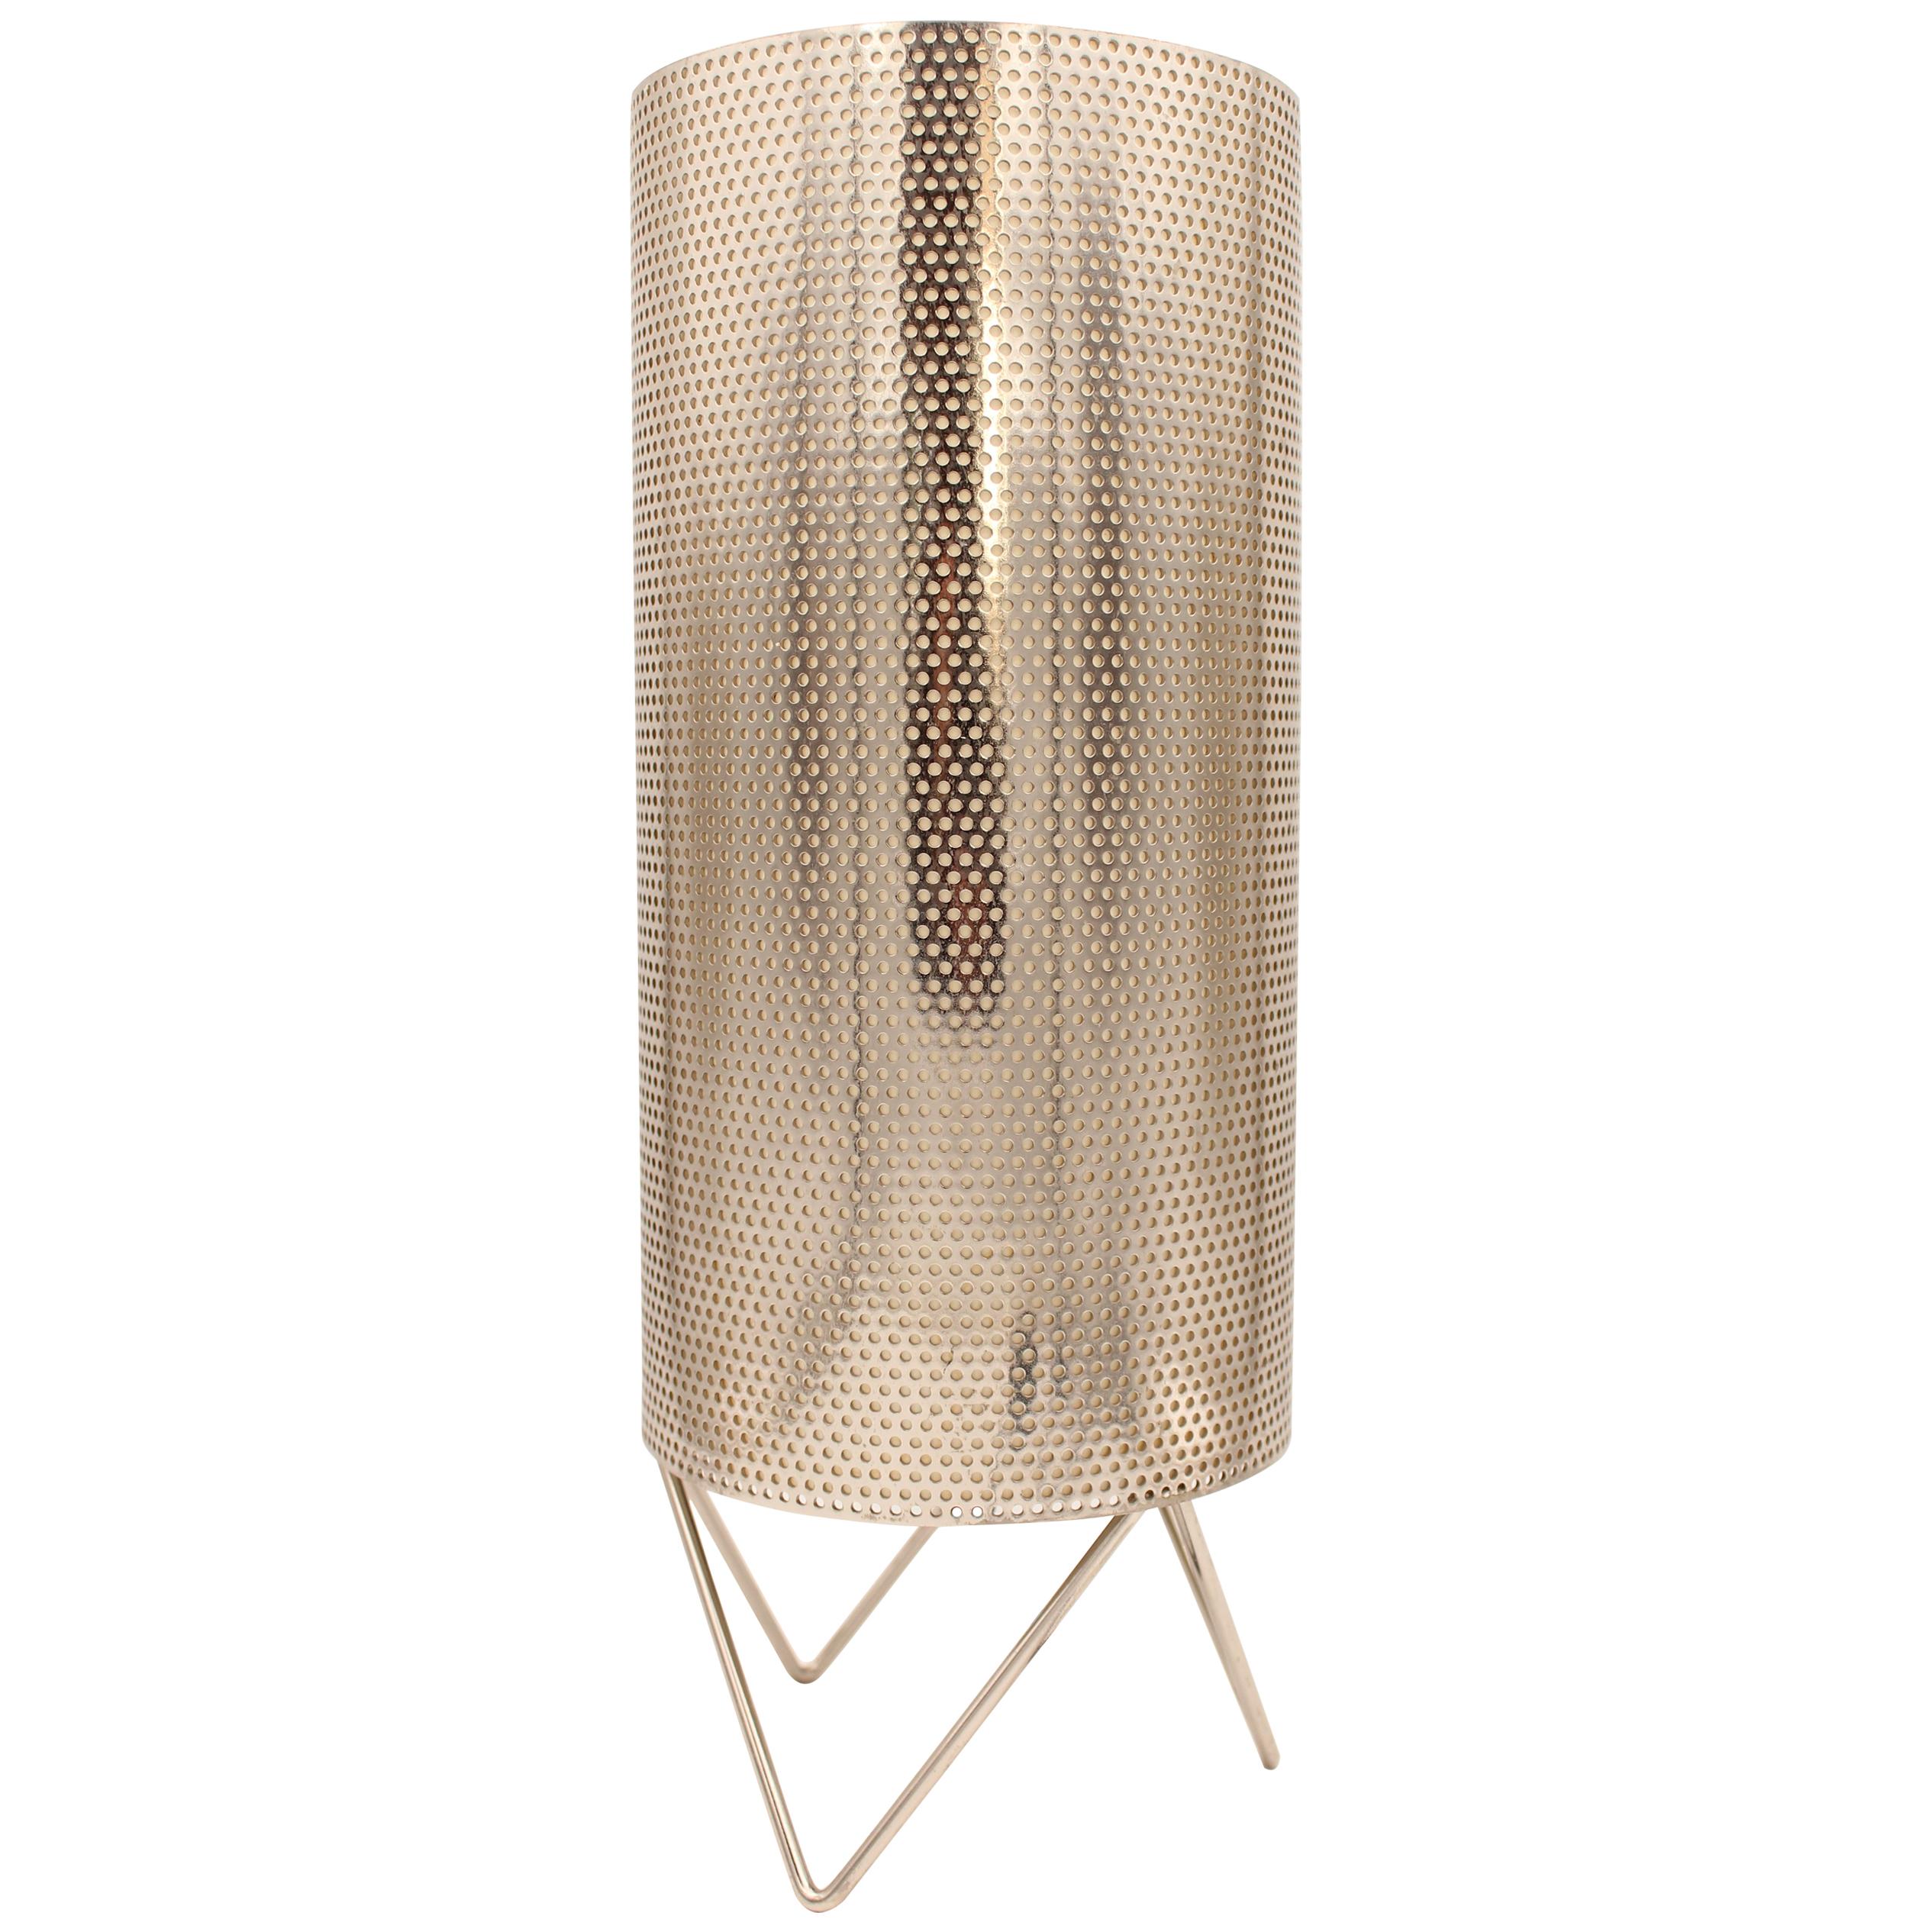 Perforated Metal Table Lamp by Barba Corsini for Gaudi's Casa Mila